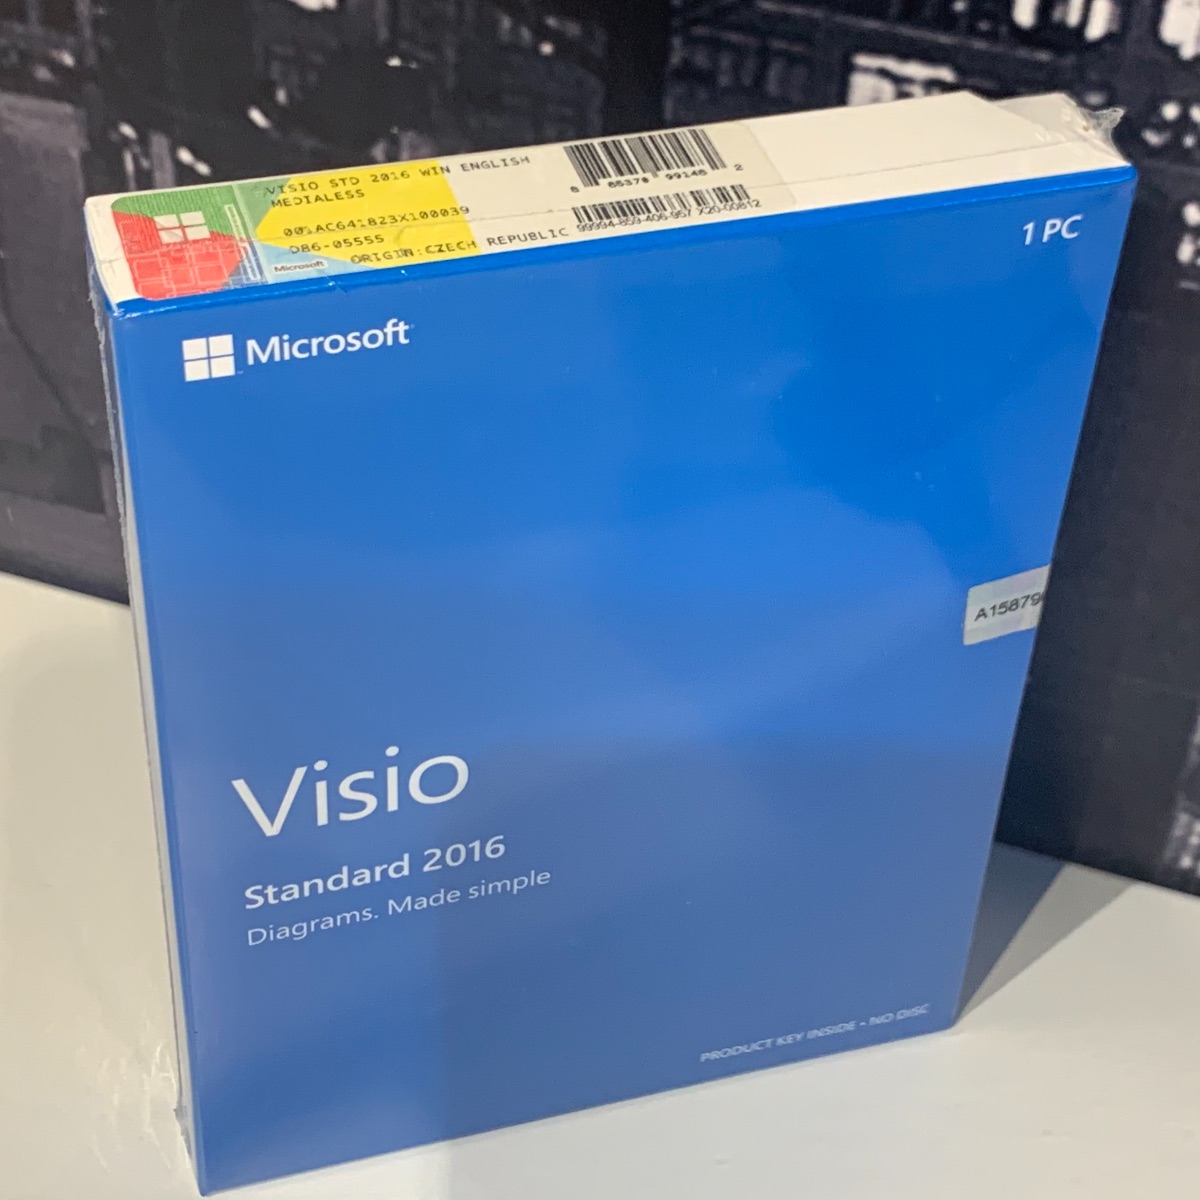 Microsoft Visio 2016 Standard Original UK 365 New and Sealed D86-05555 885370991482 (Brand New & Sealed)